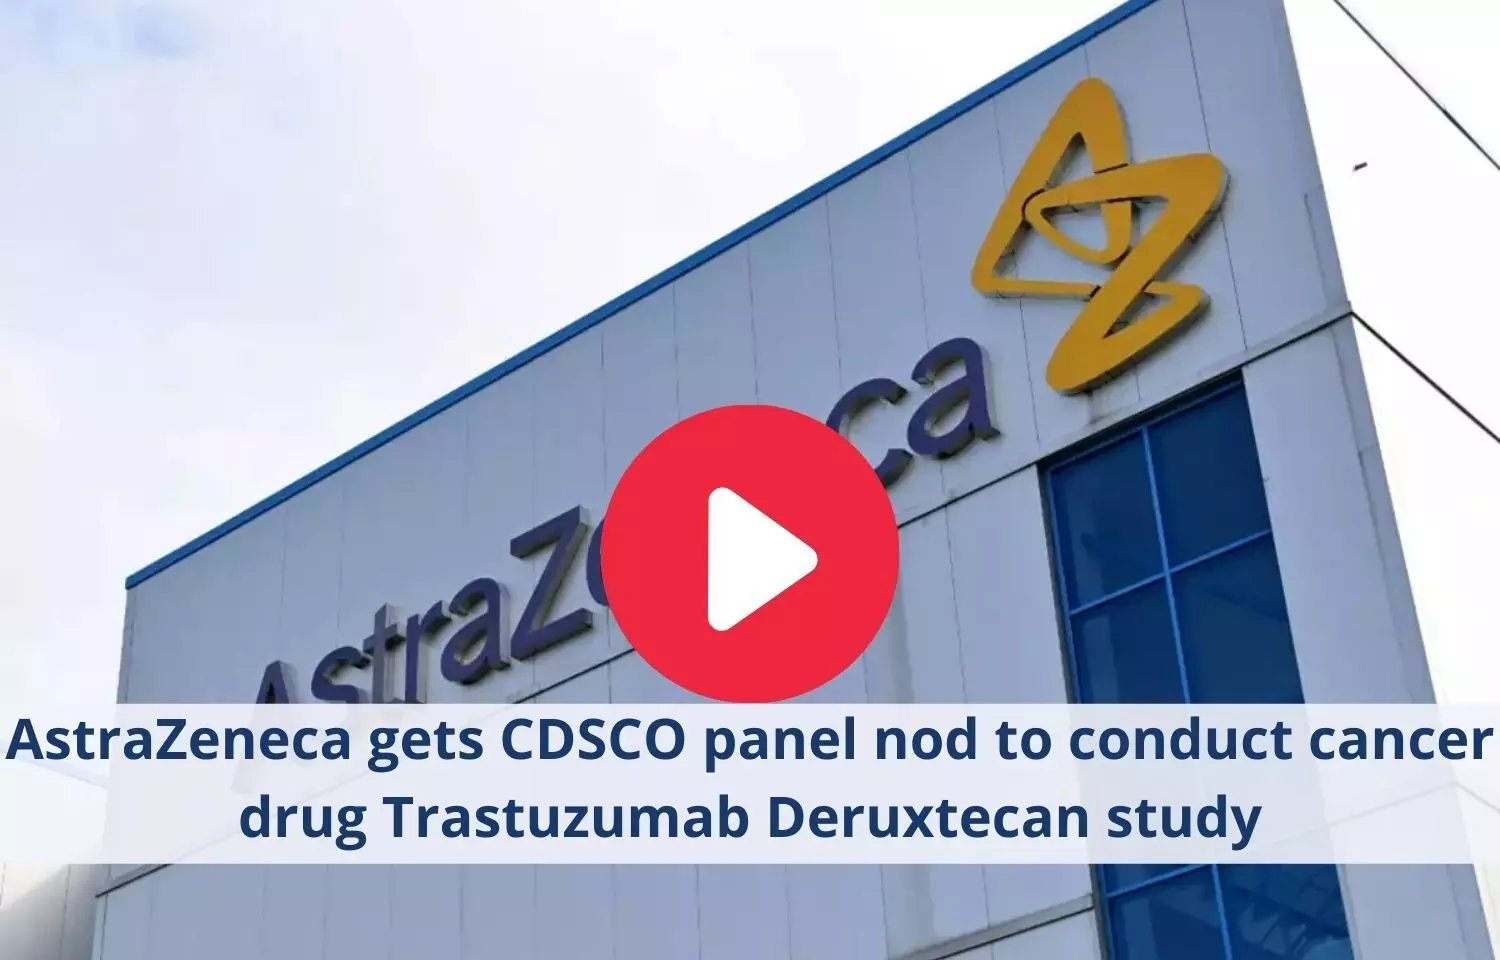 AstraZeneca receives CDSCO panel nod to conduct phase 3 trial of Trastuzumab Deruxtecan